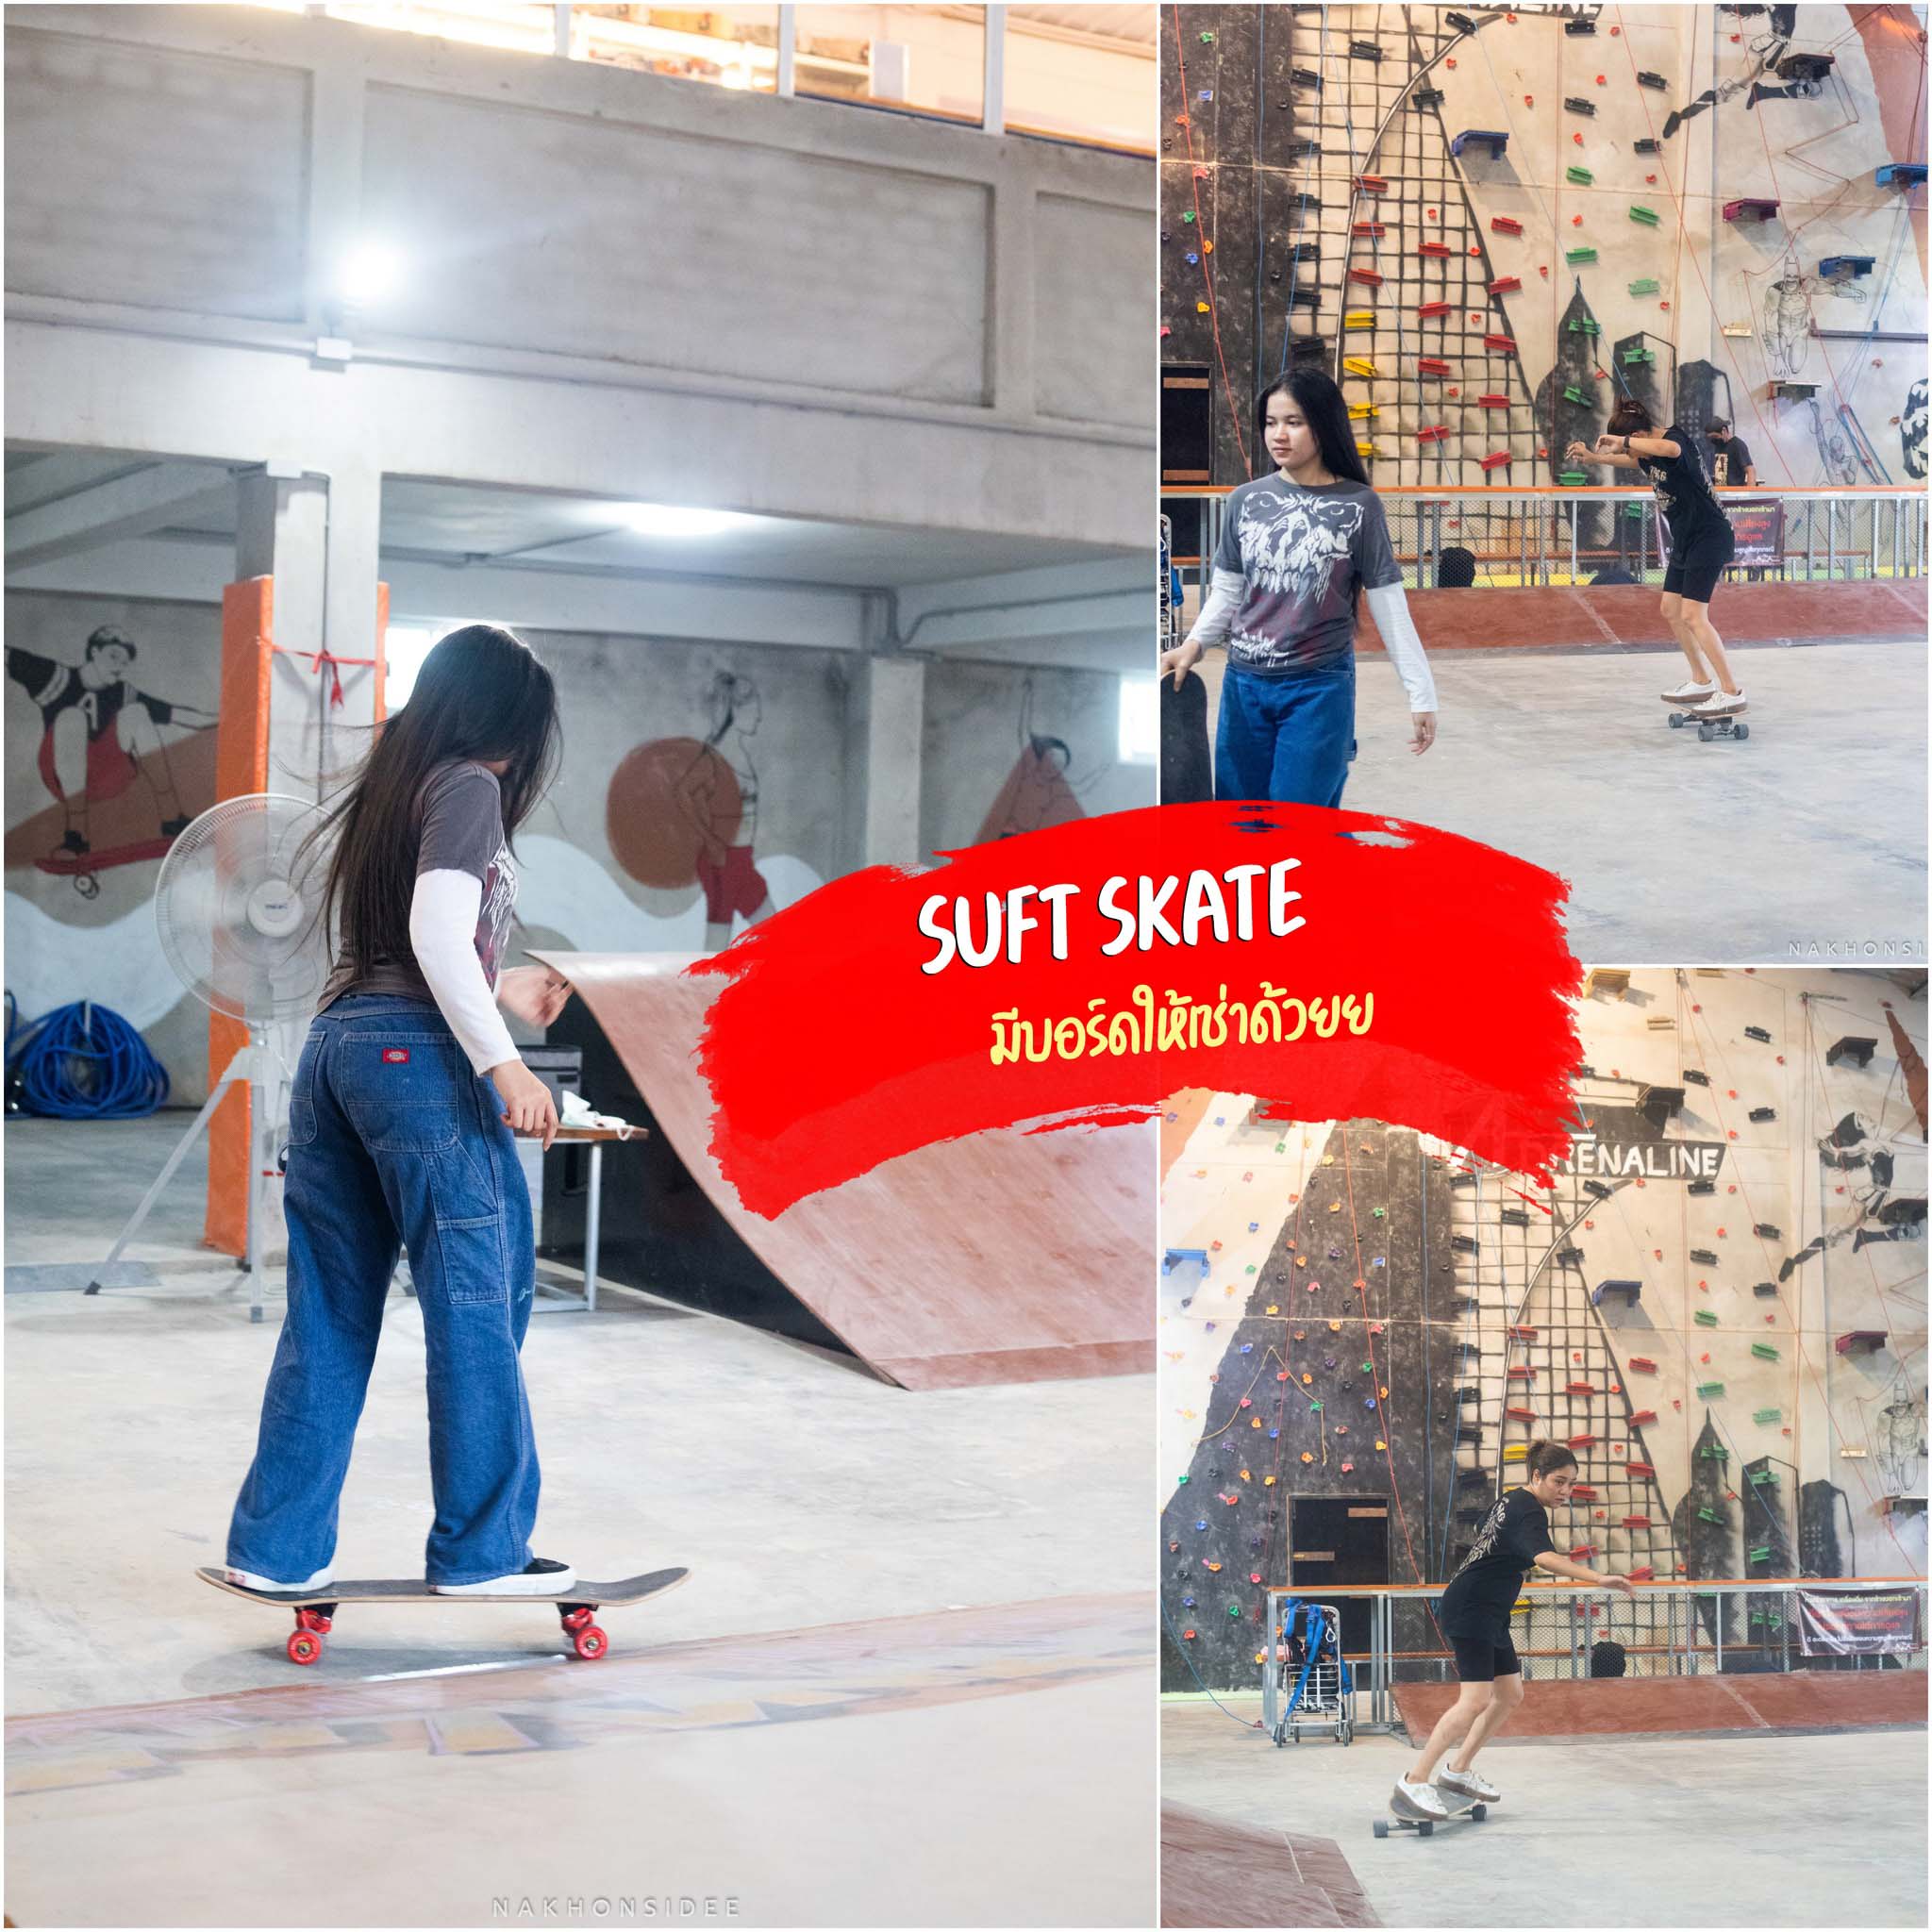 Suft-Skate -มีสนามความชันต่างๆ-ให้เล่นเซิฟสเก็ตกันนน
 ปีนผา,นครศรี,จุดเช็คอิน,คาเฟ่,zipline,theadrenaline